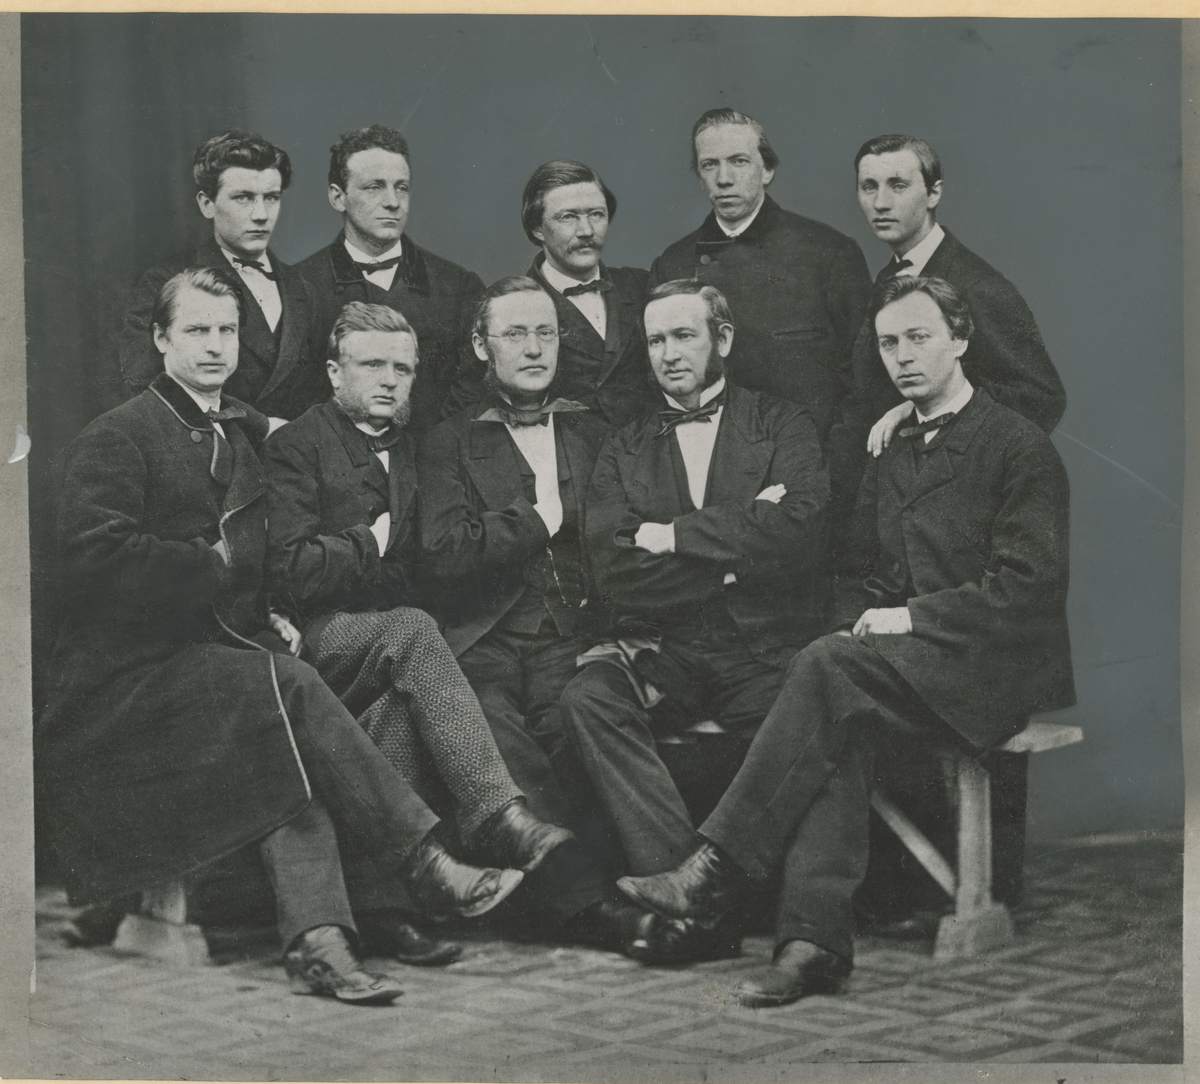 Gammelt foto fra overlærer Richters kvartett (1864-8?).

Sittende, fra venstre: Ludvig Hammer, Birch, Richter, Mordt, Carl Bang.
Stående, fra venstre: Knutsen, Jacob Bang, Rummelhoff, Darre, Birkeland.